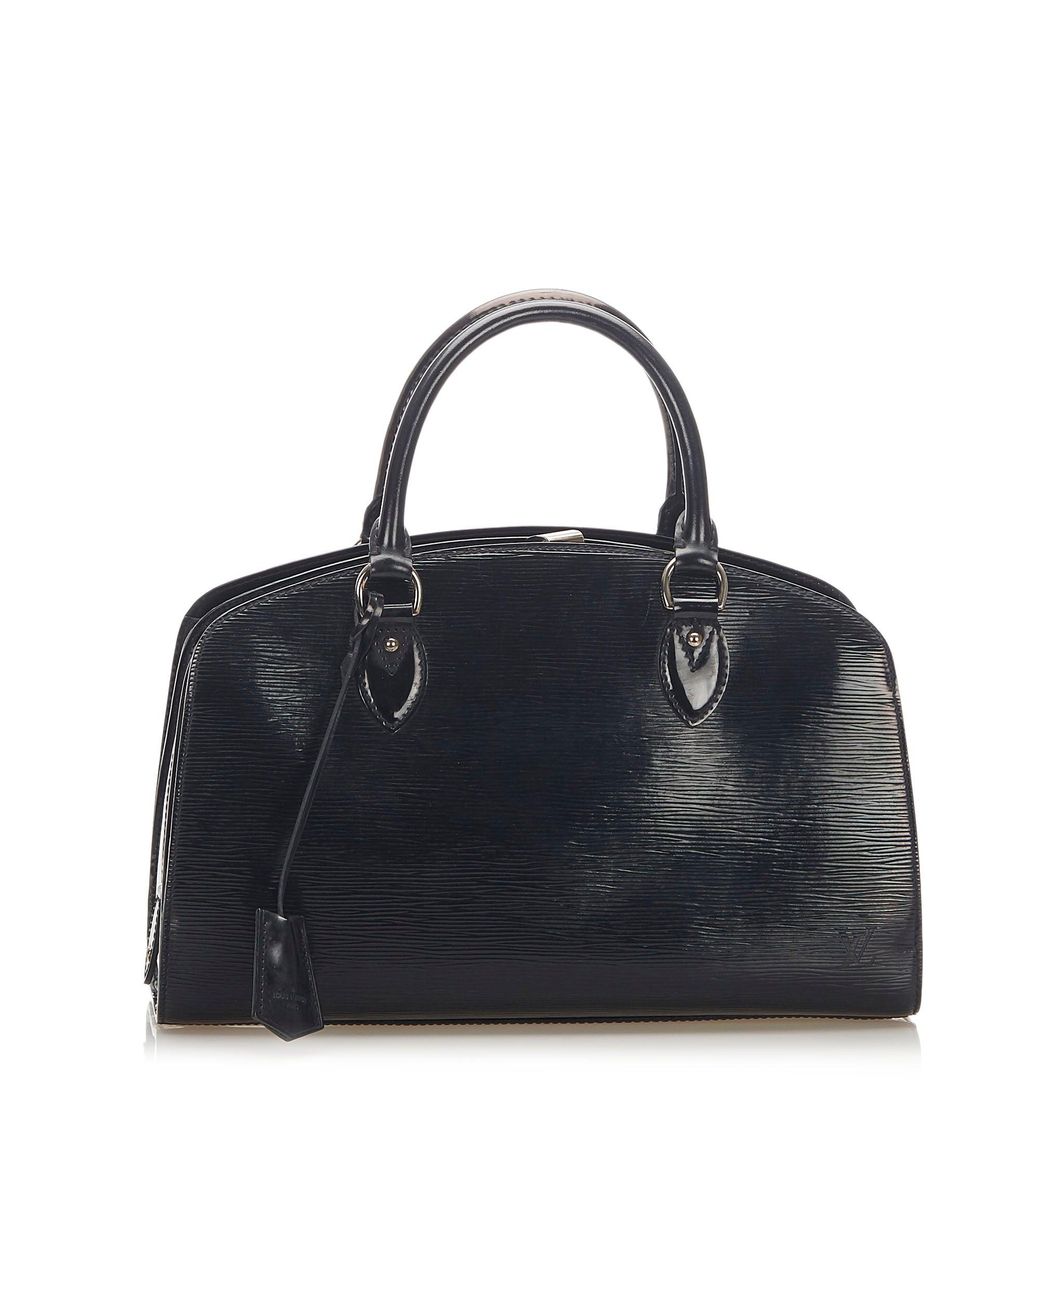 Preloved Louis Vuitton Pont Neuf PM Black Epi Leather Handbag